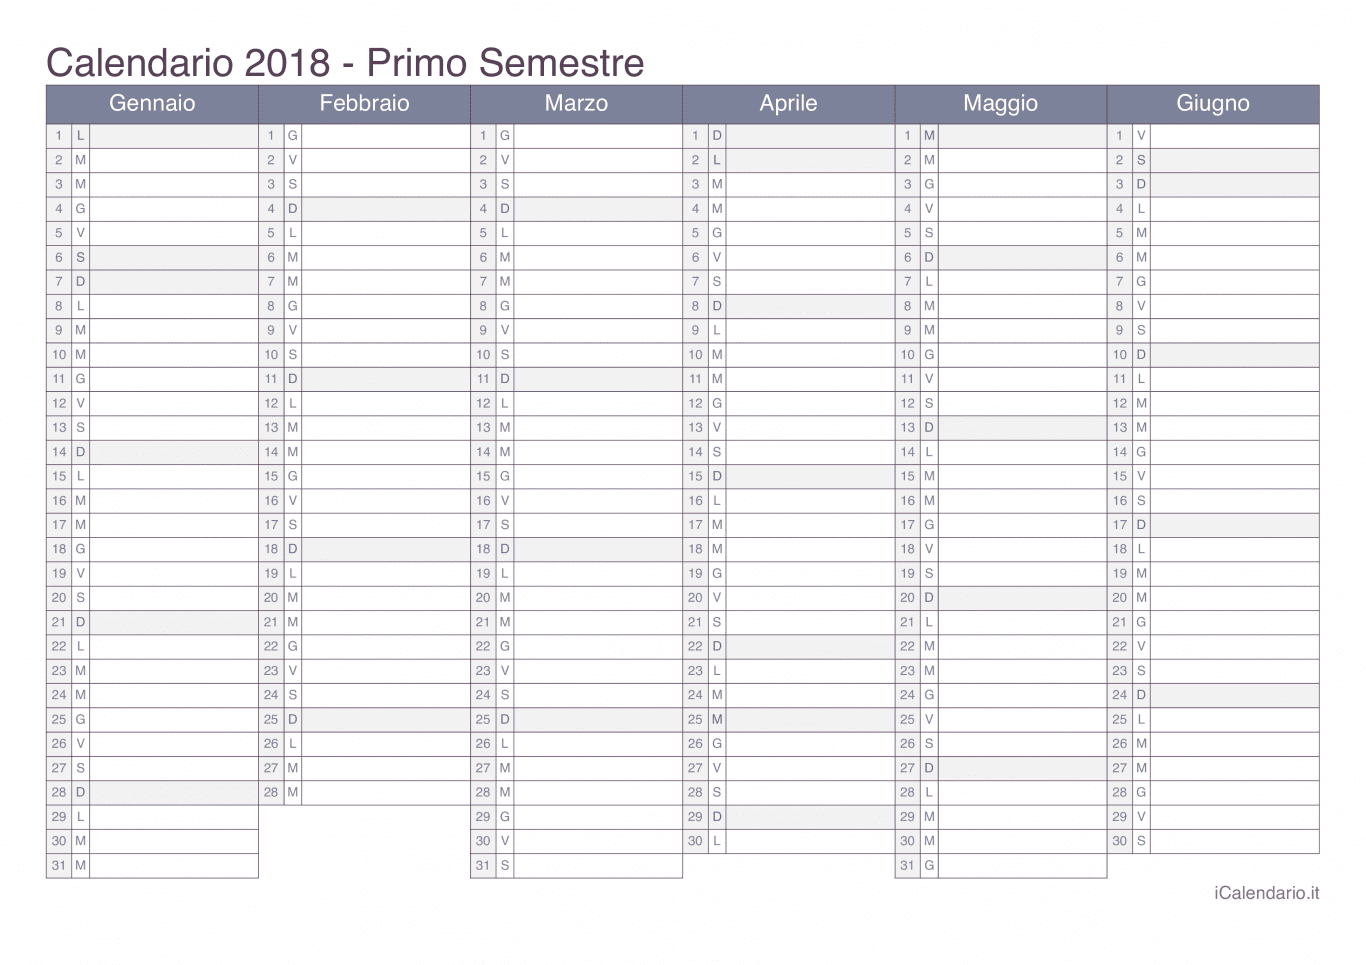 Calendario semestrale 2018 - Office